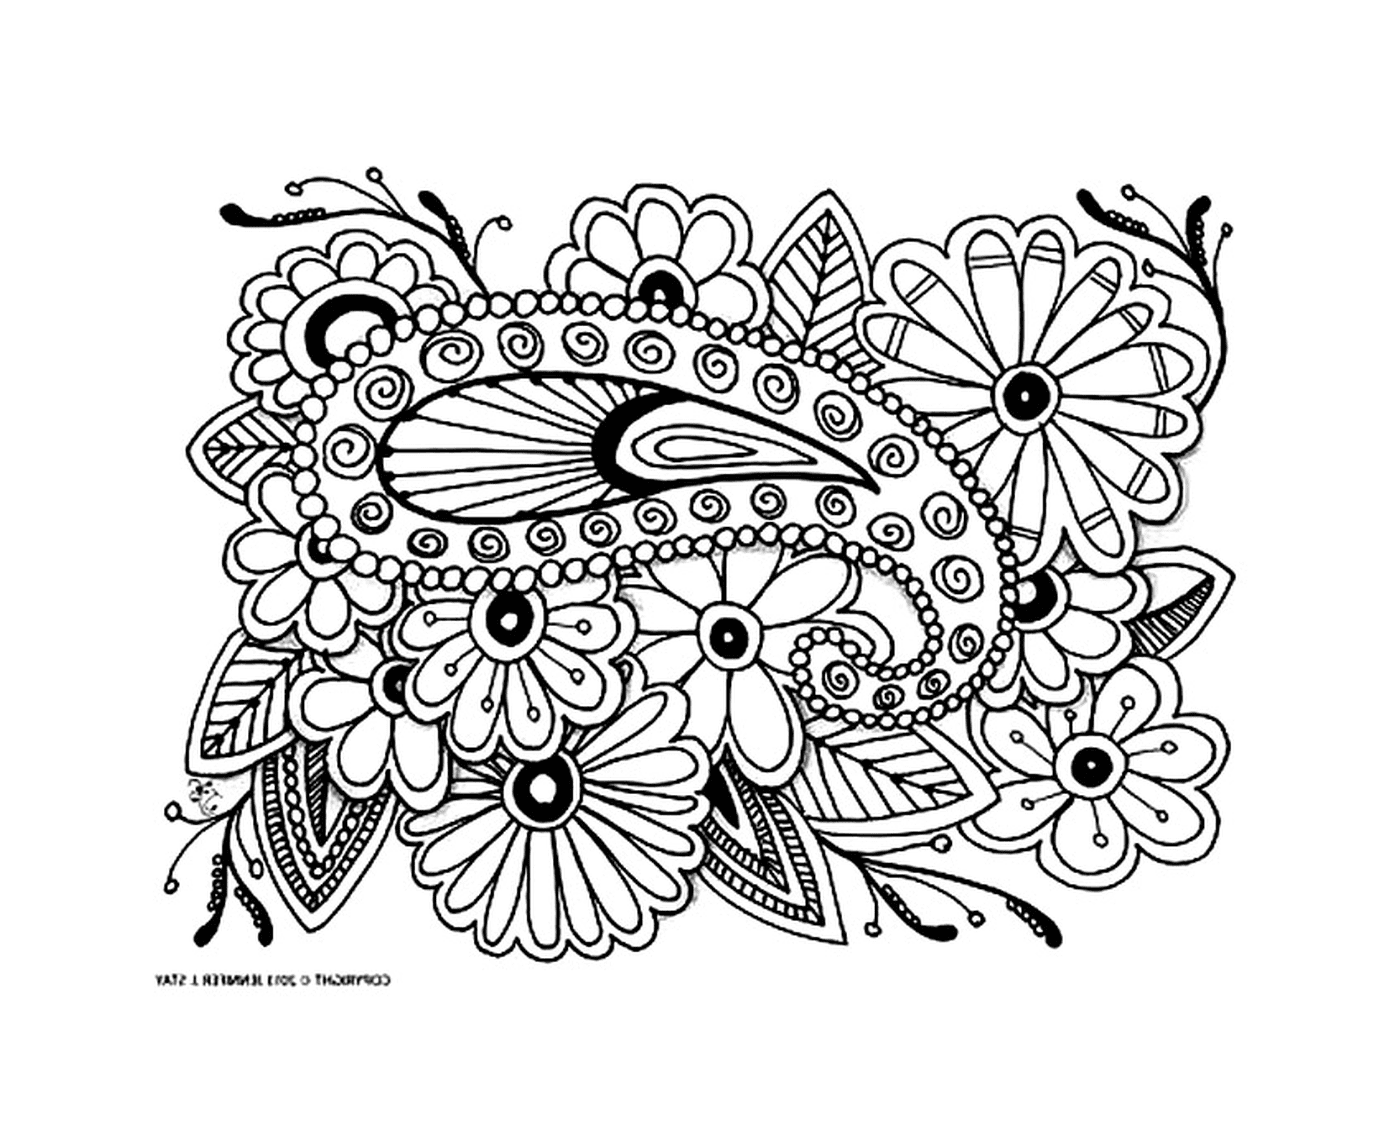  a floral pattern 